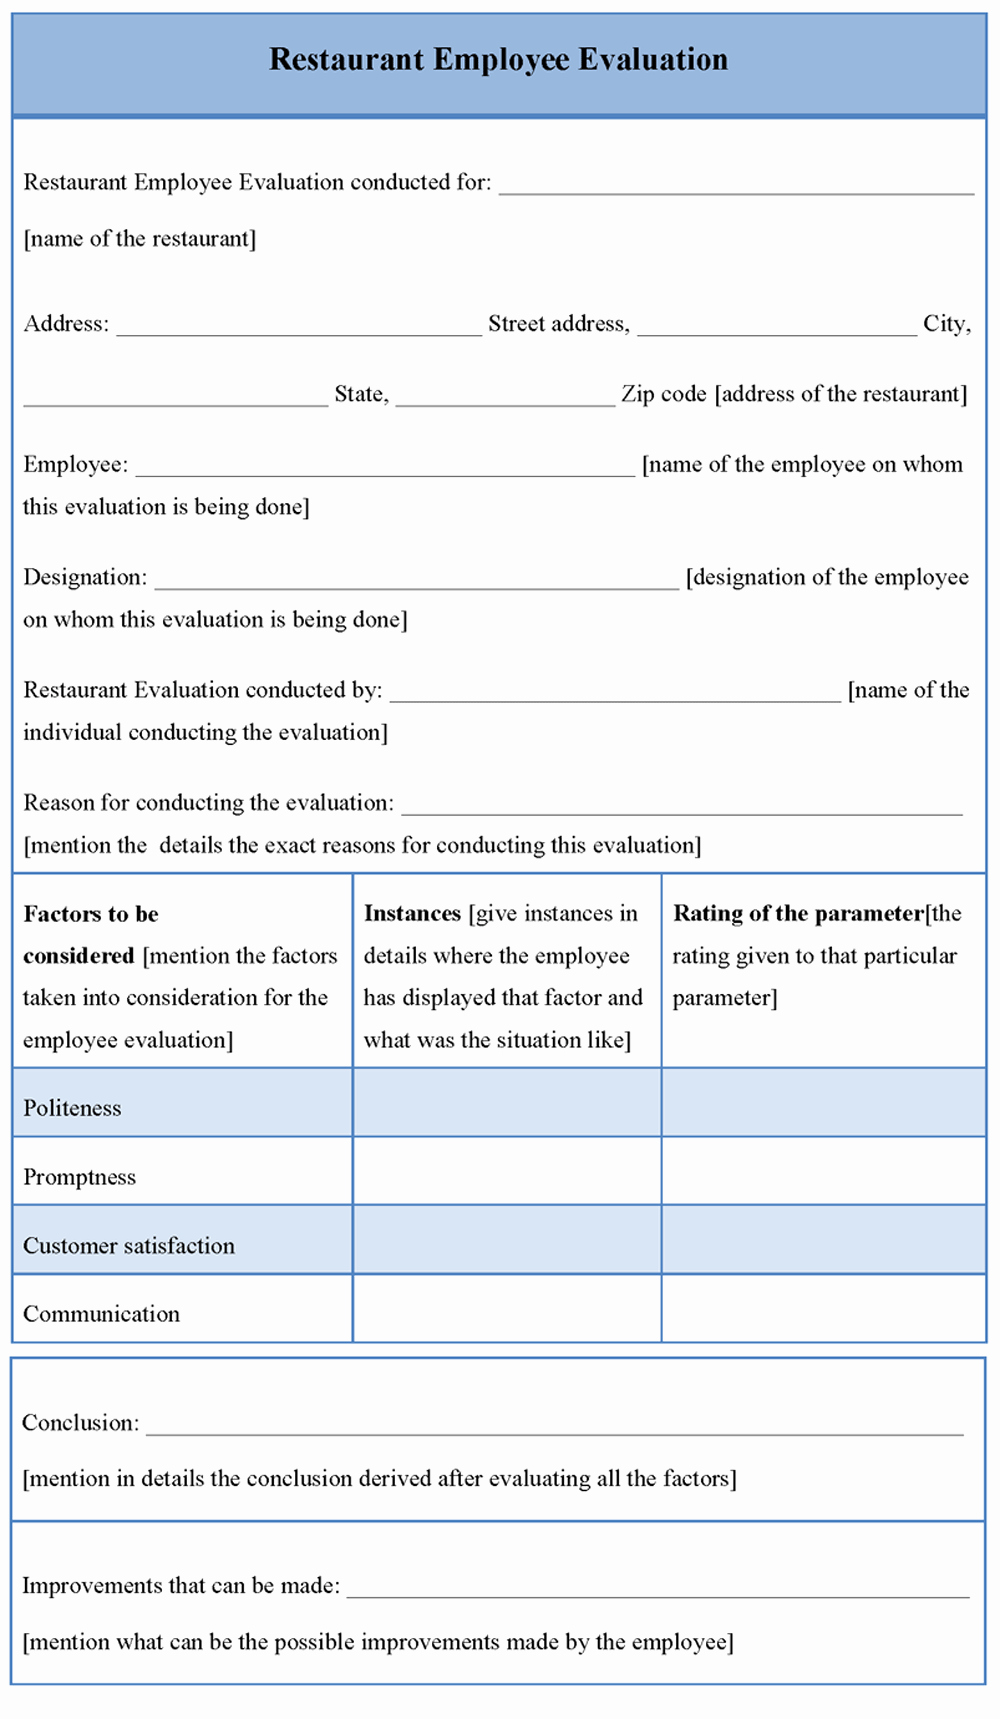 Employee Evaluation form Template Luxury Evaluation Template for Restaurant Employee Sample Of